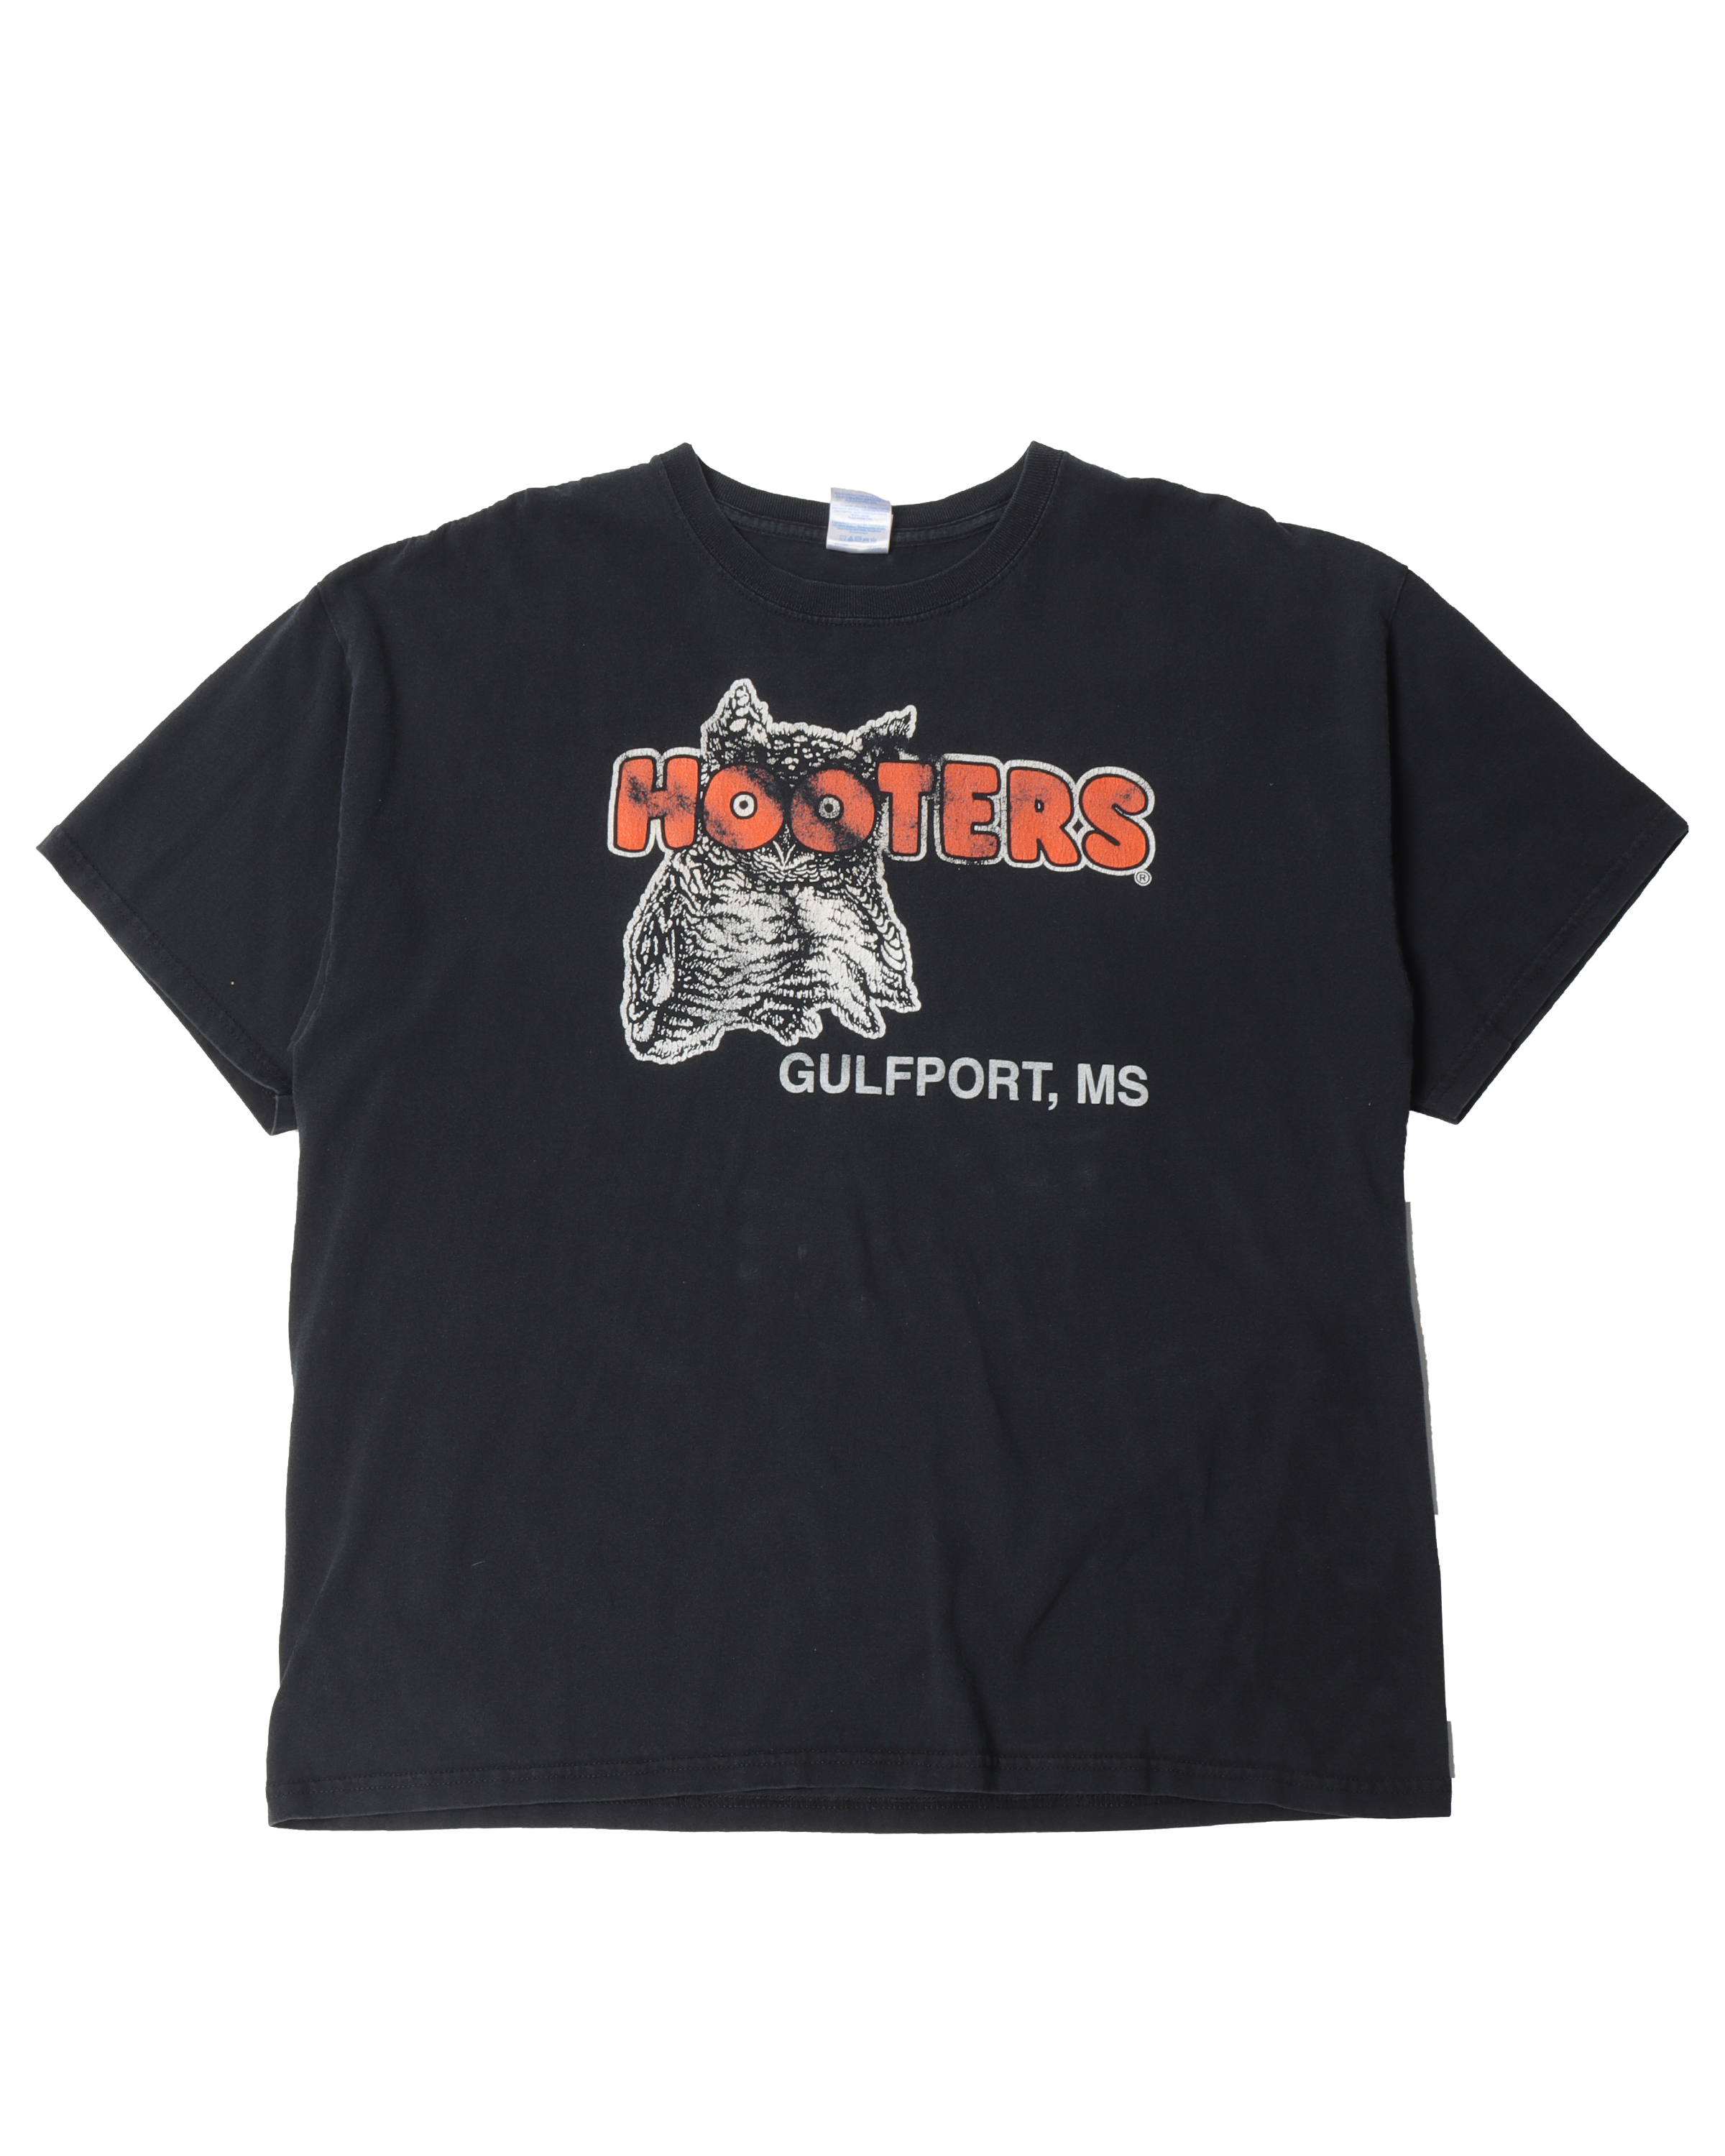 Hooters Gulfport, MS T-Shirt